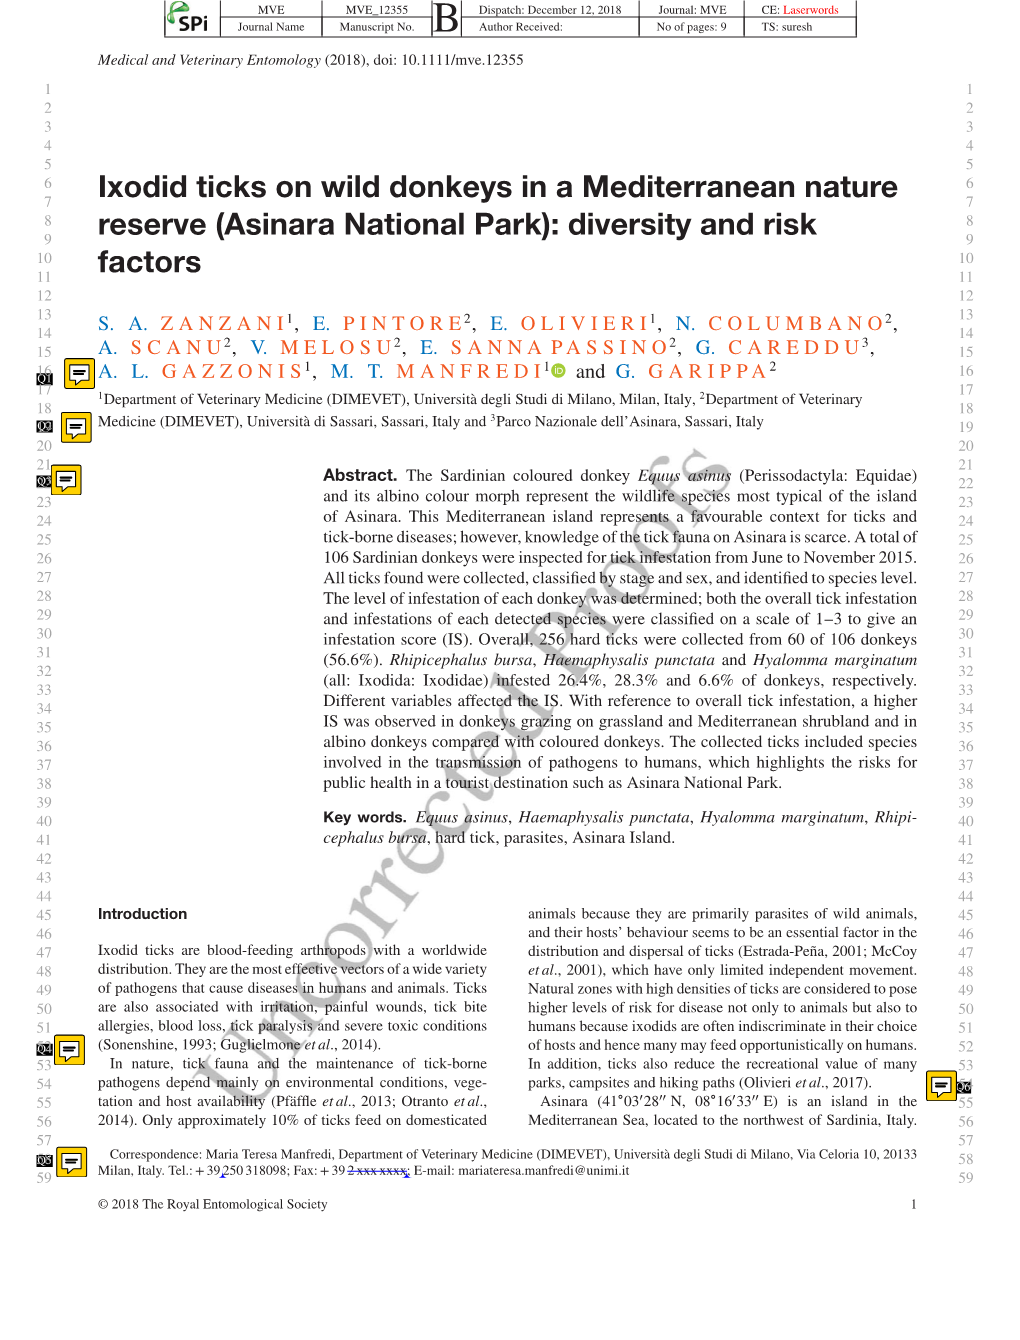 Ixodid Ticks on Wild Donkeys in a Mediterranean Nature Reserve